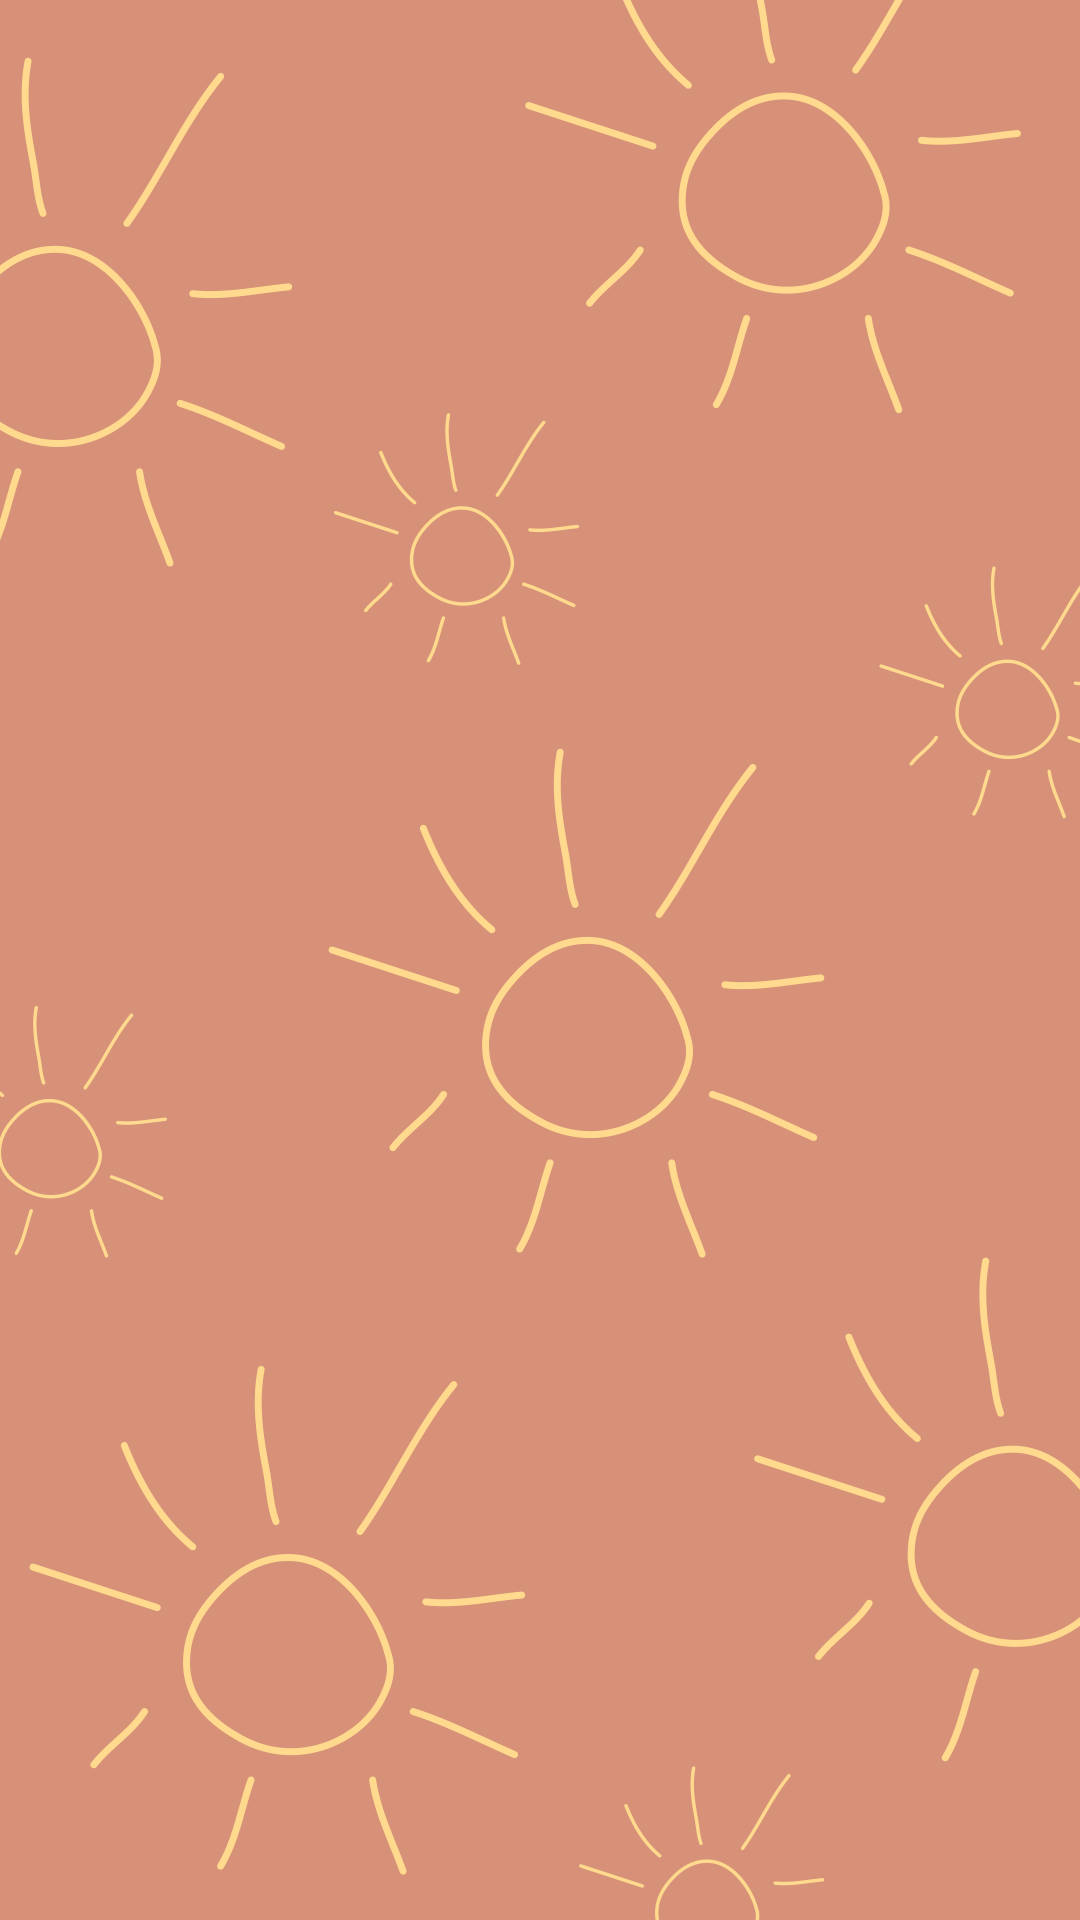 Simple Boho Sun Drawings Background